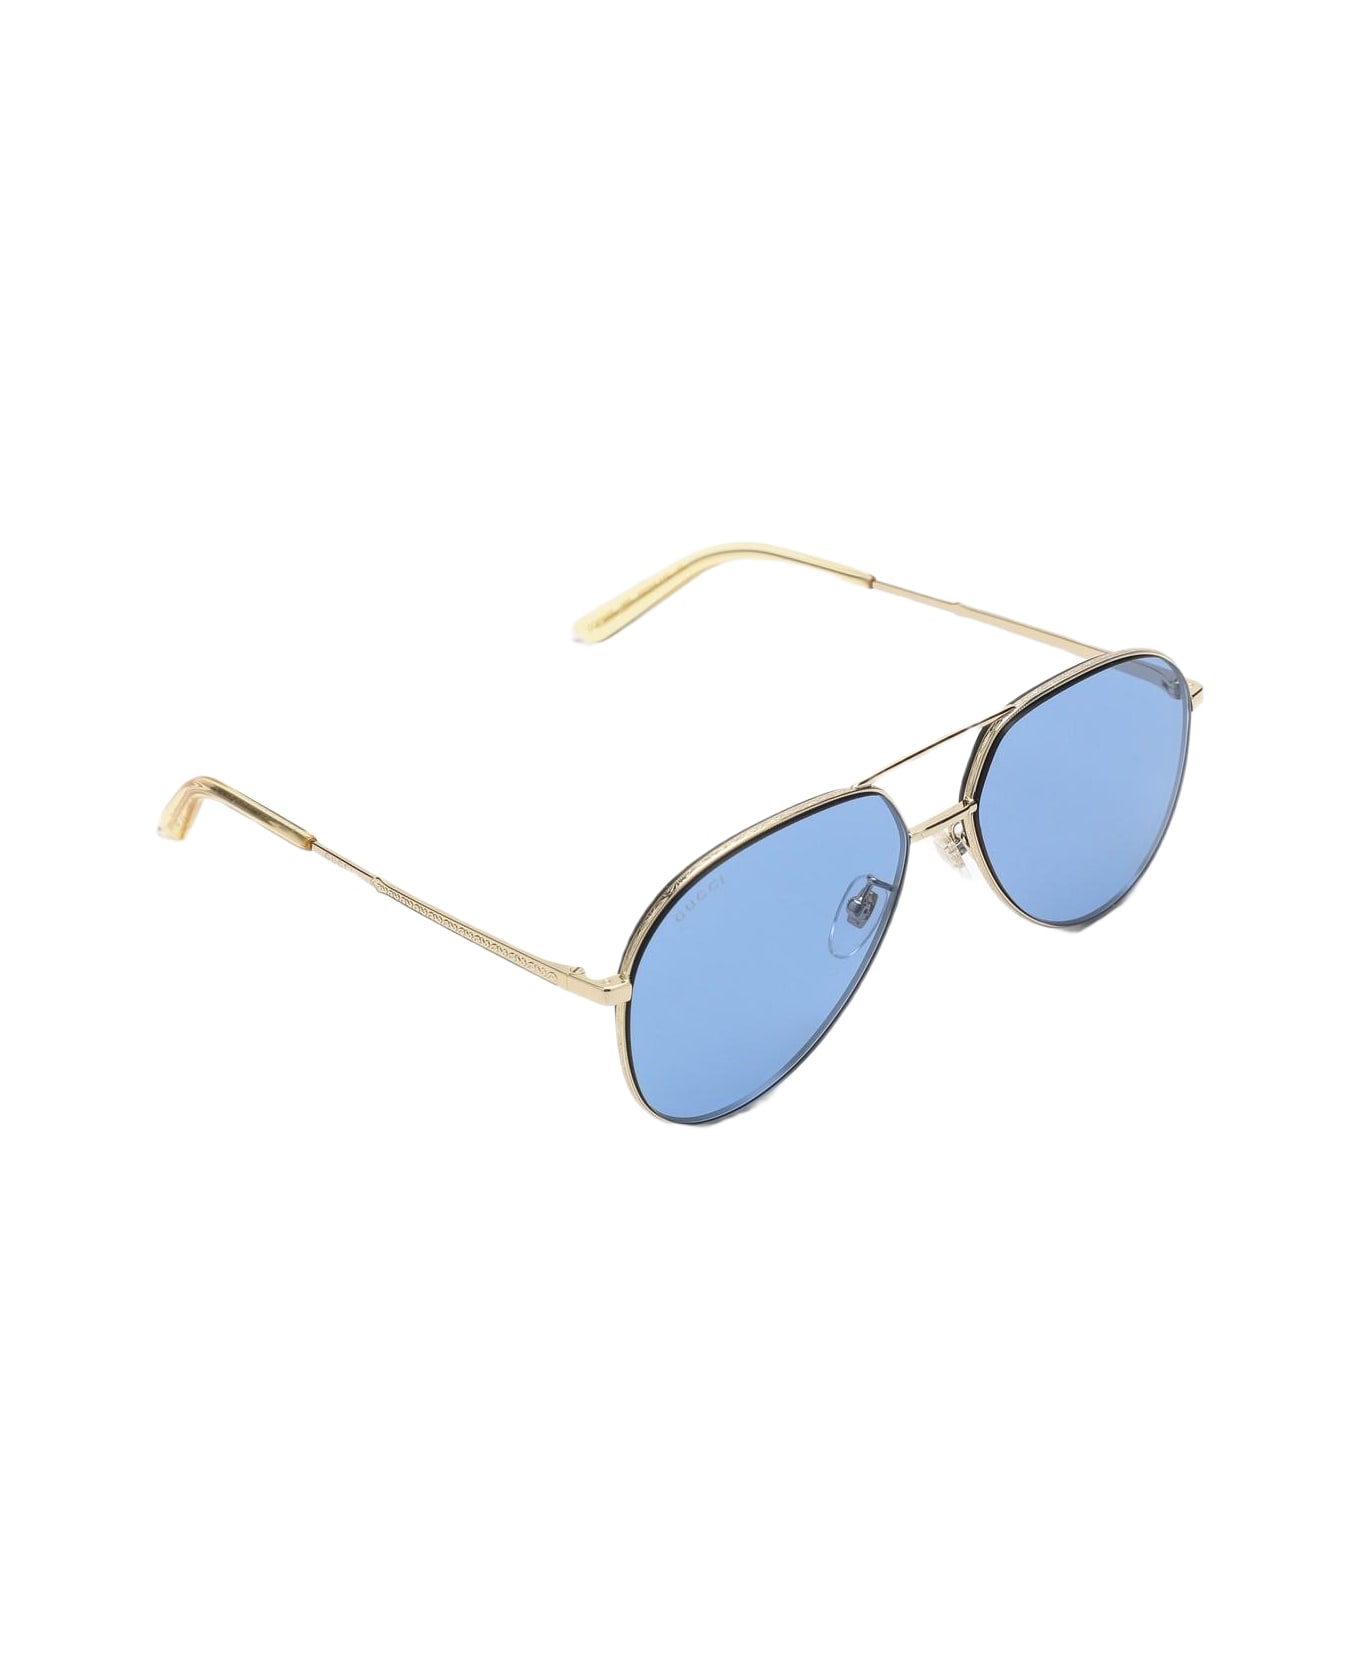 Gucci Eyewear Aviator Blue Sunglasses